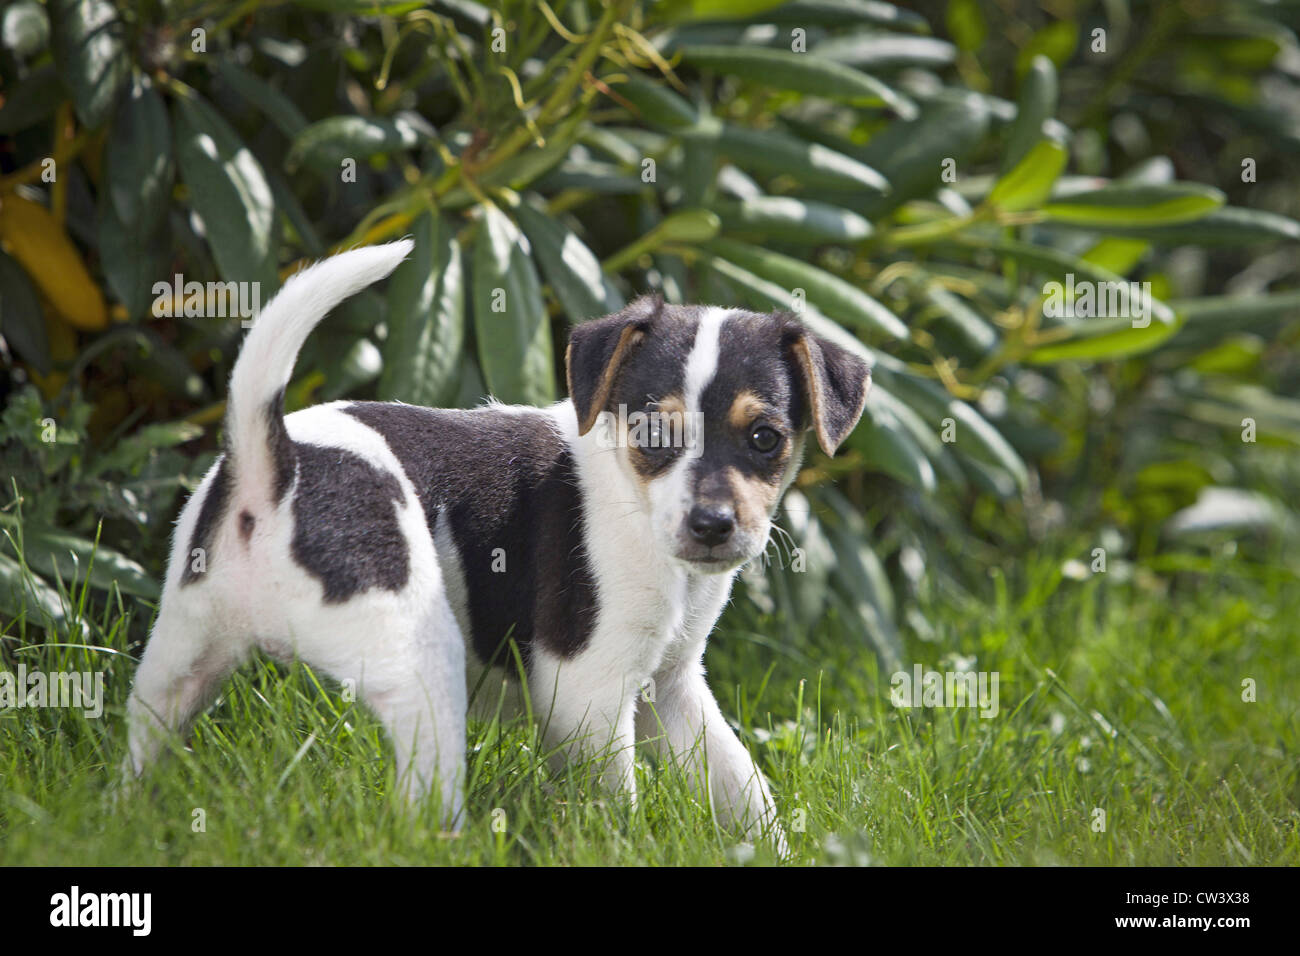 Danish Swedish Farmdog, Dansk/svensk gardshund. Puppy standing in grass in a garden Stock Photo